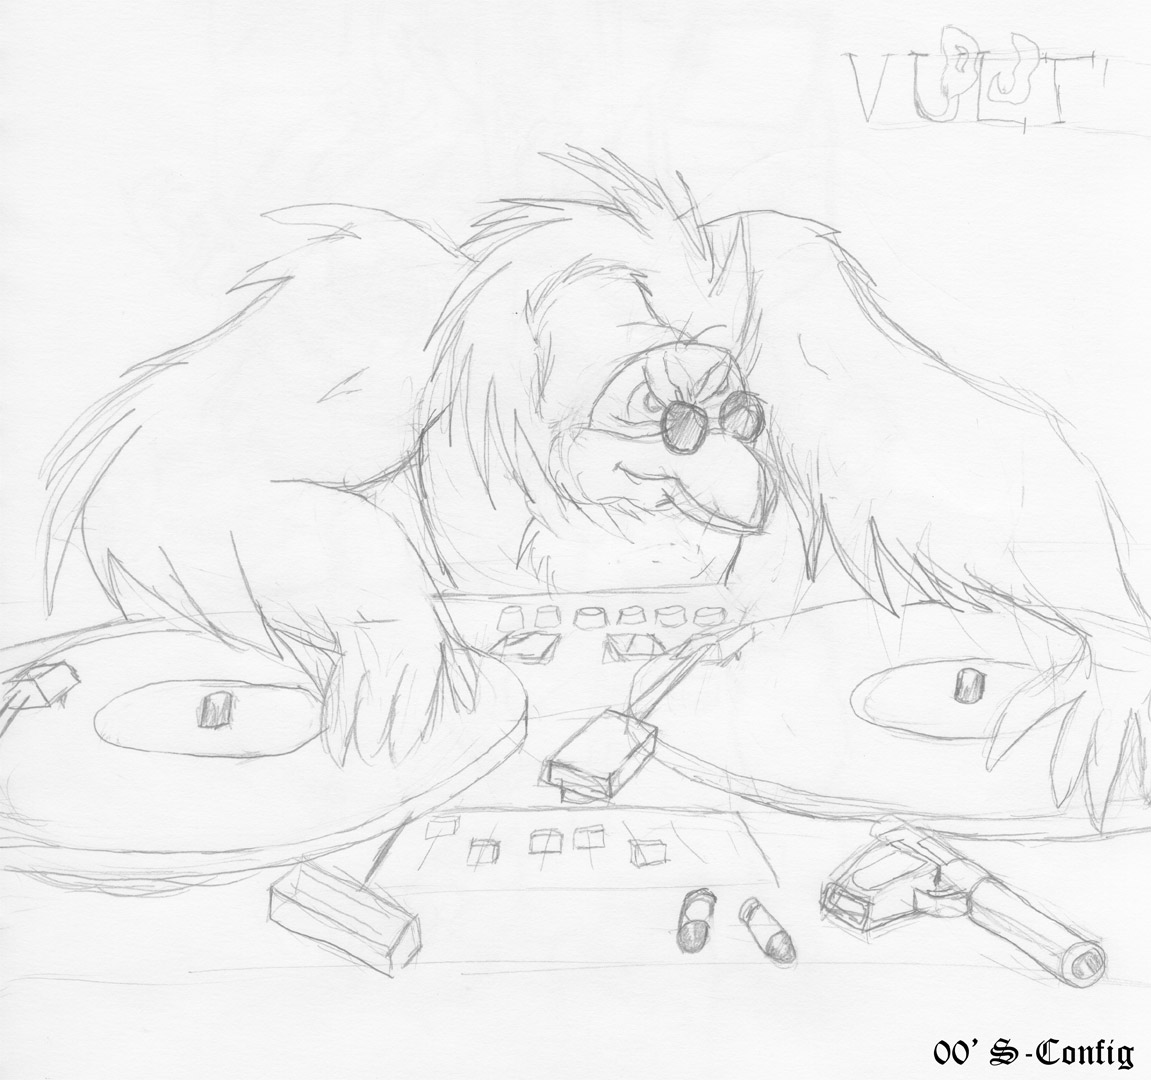 DJ Vinney the Vulture - Sketch Only.